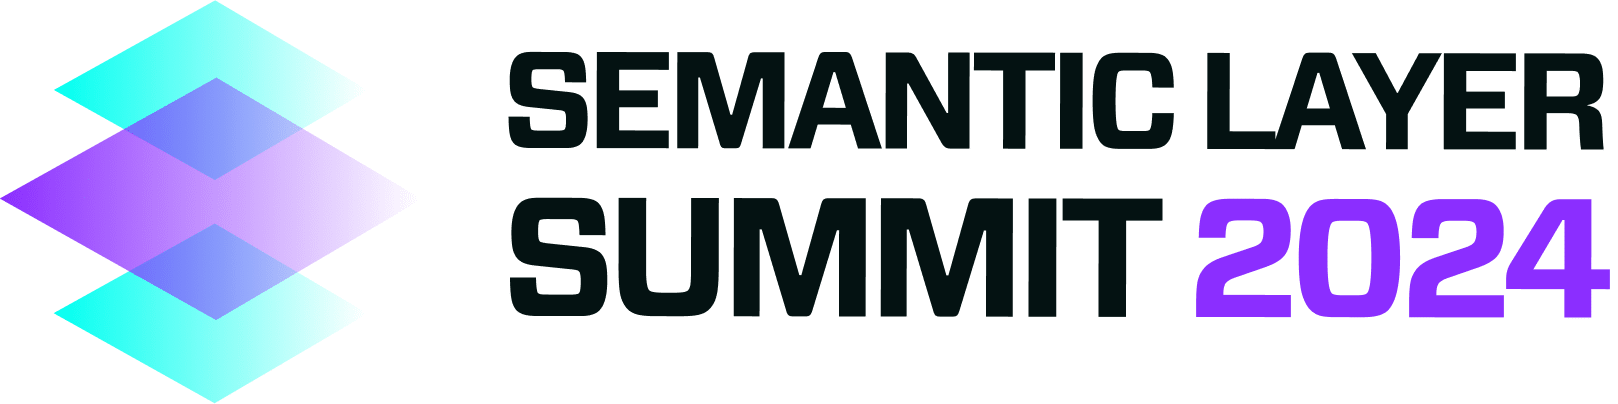 Semantic Layer Summit 2024 logo